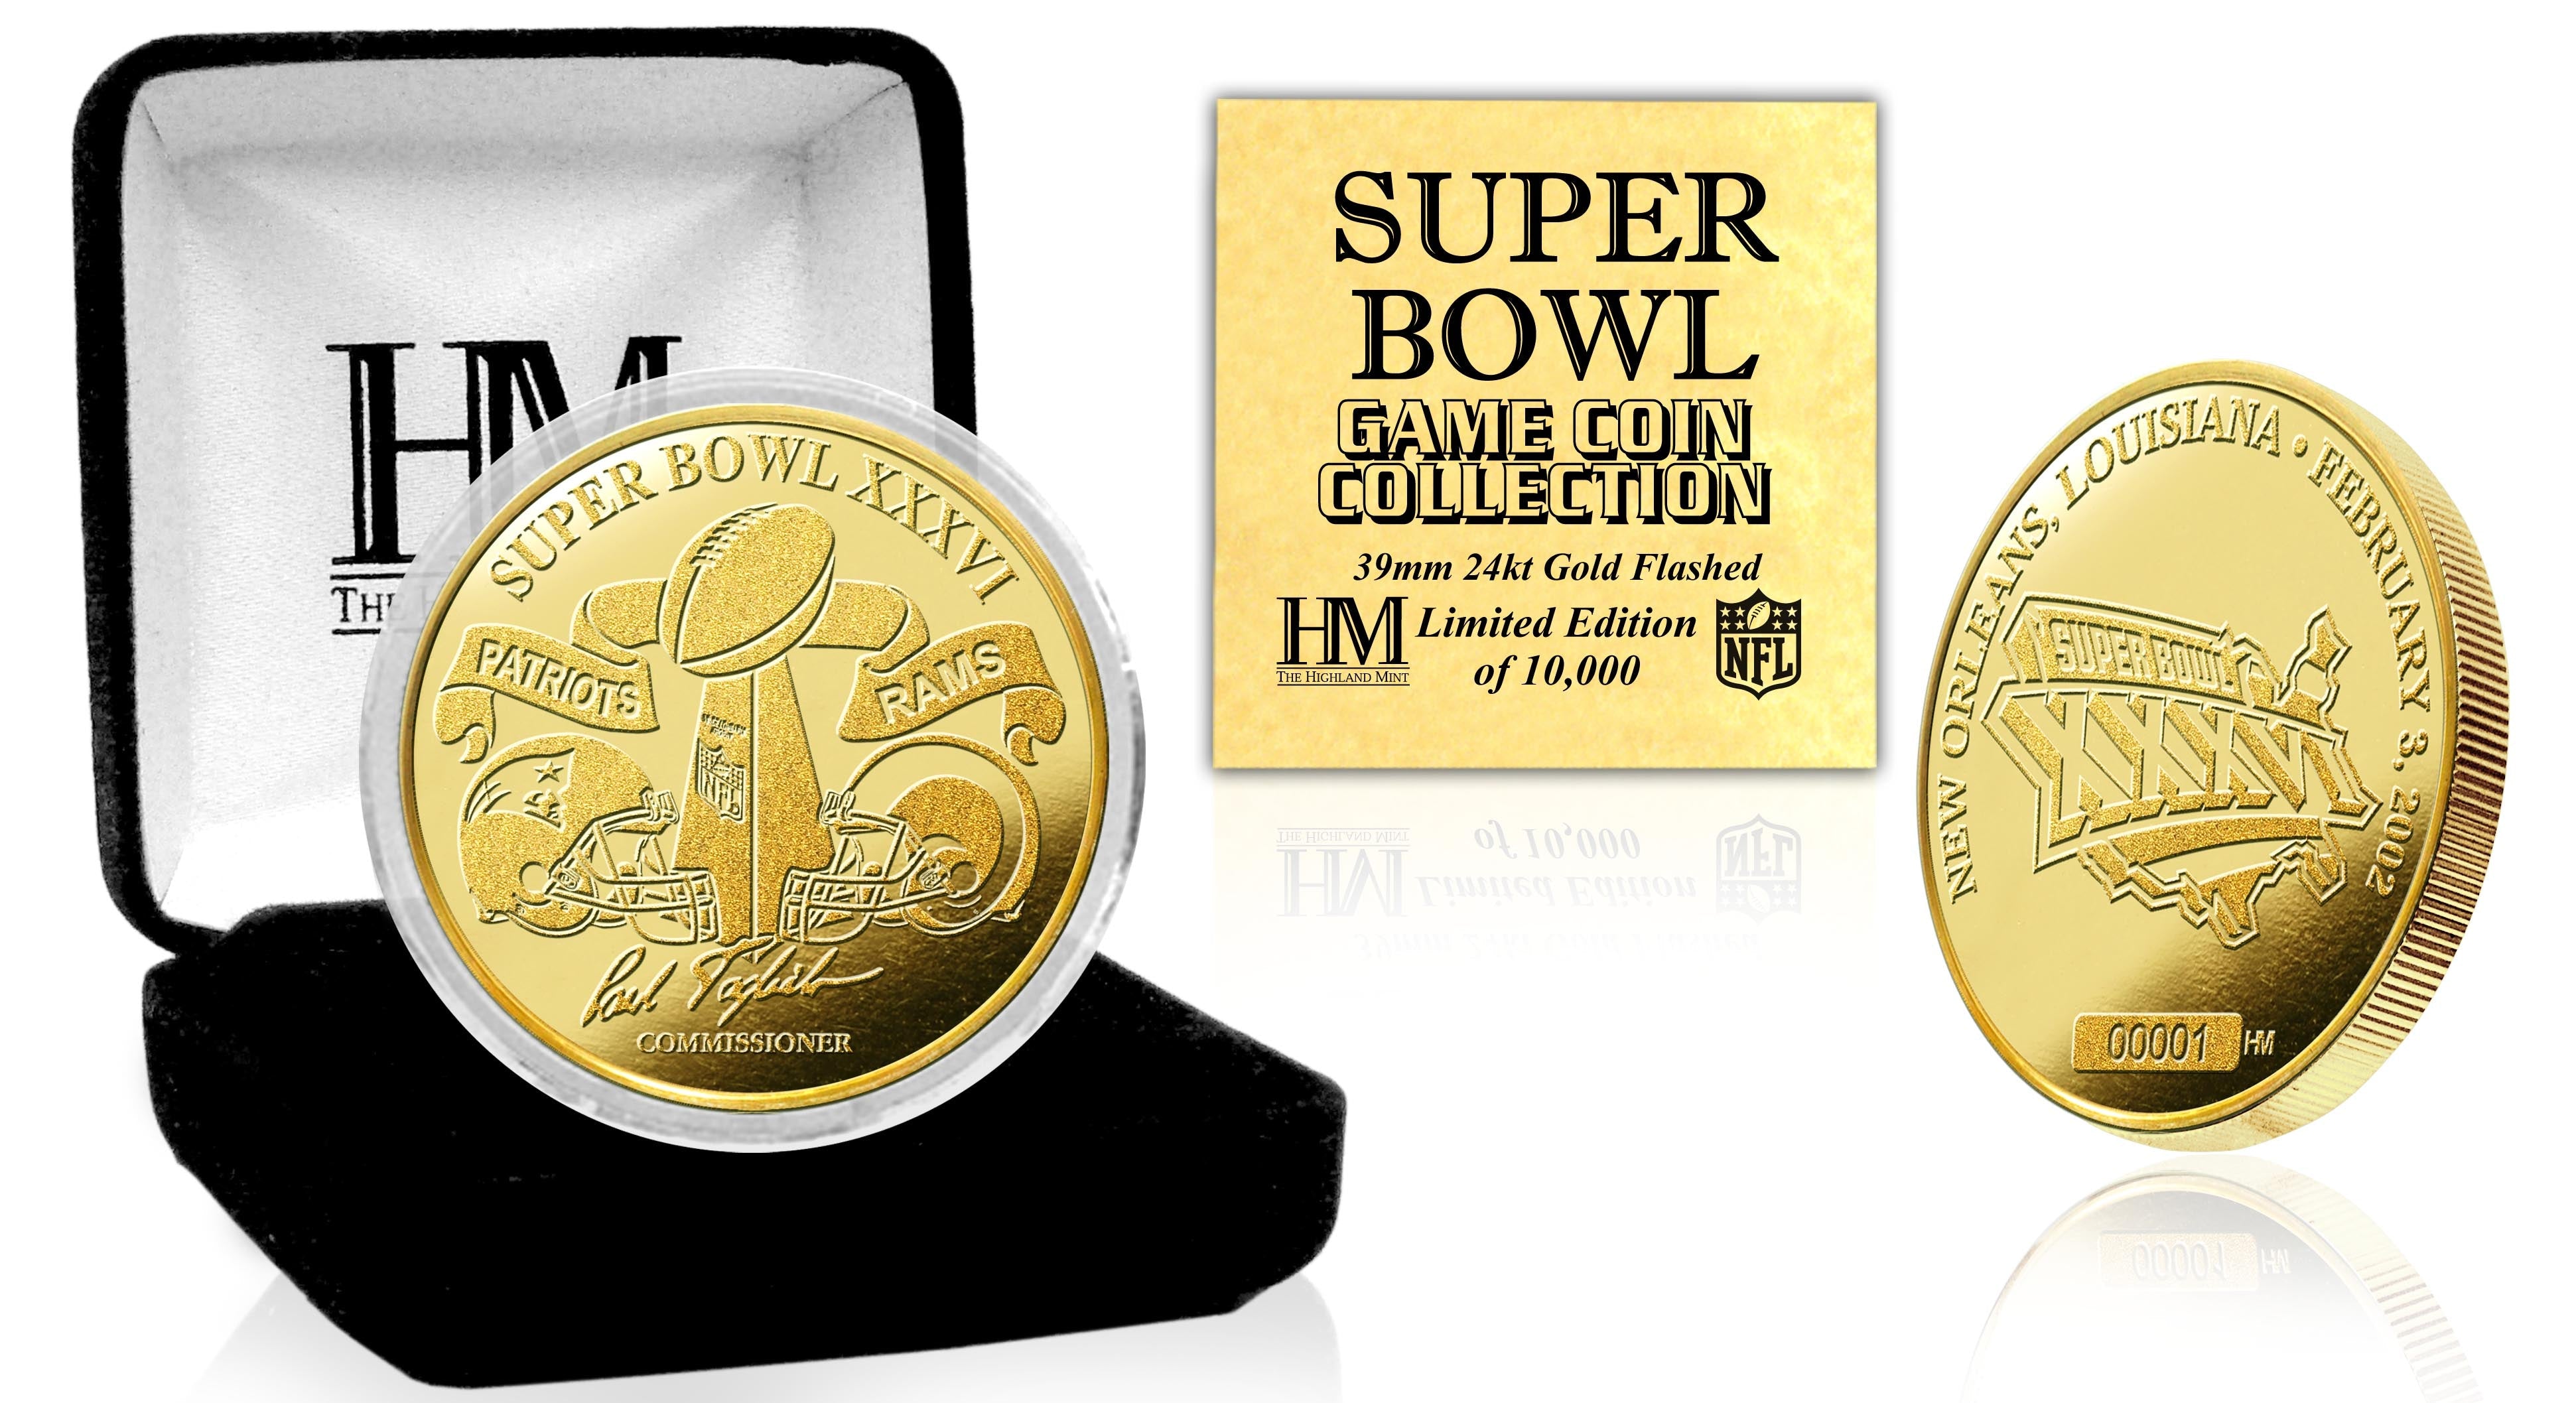 Super Bowl XXXVI 24kt Gold Flip Coin